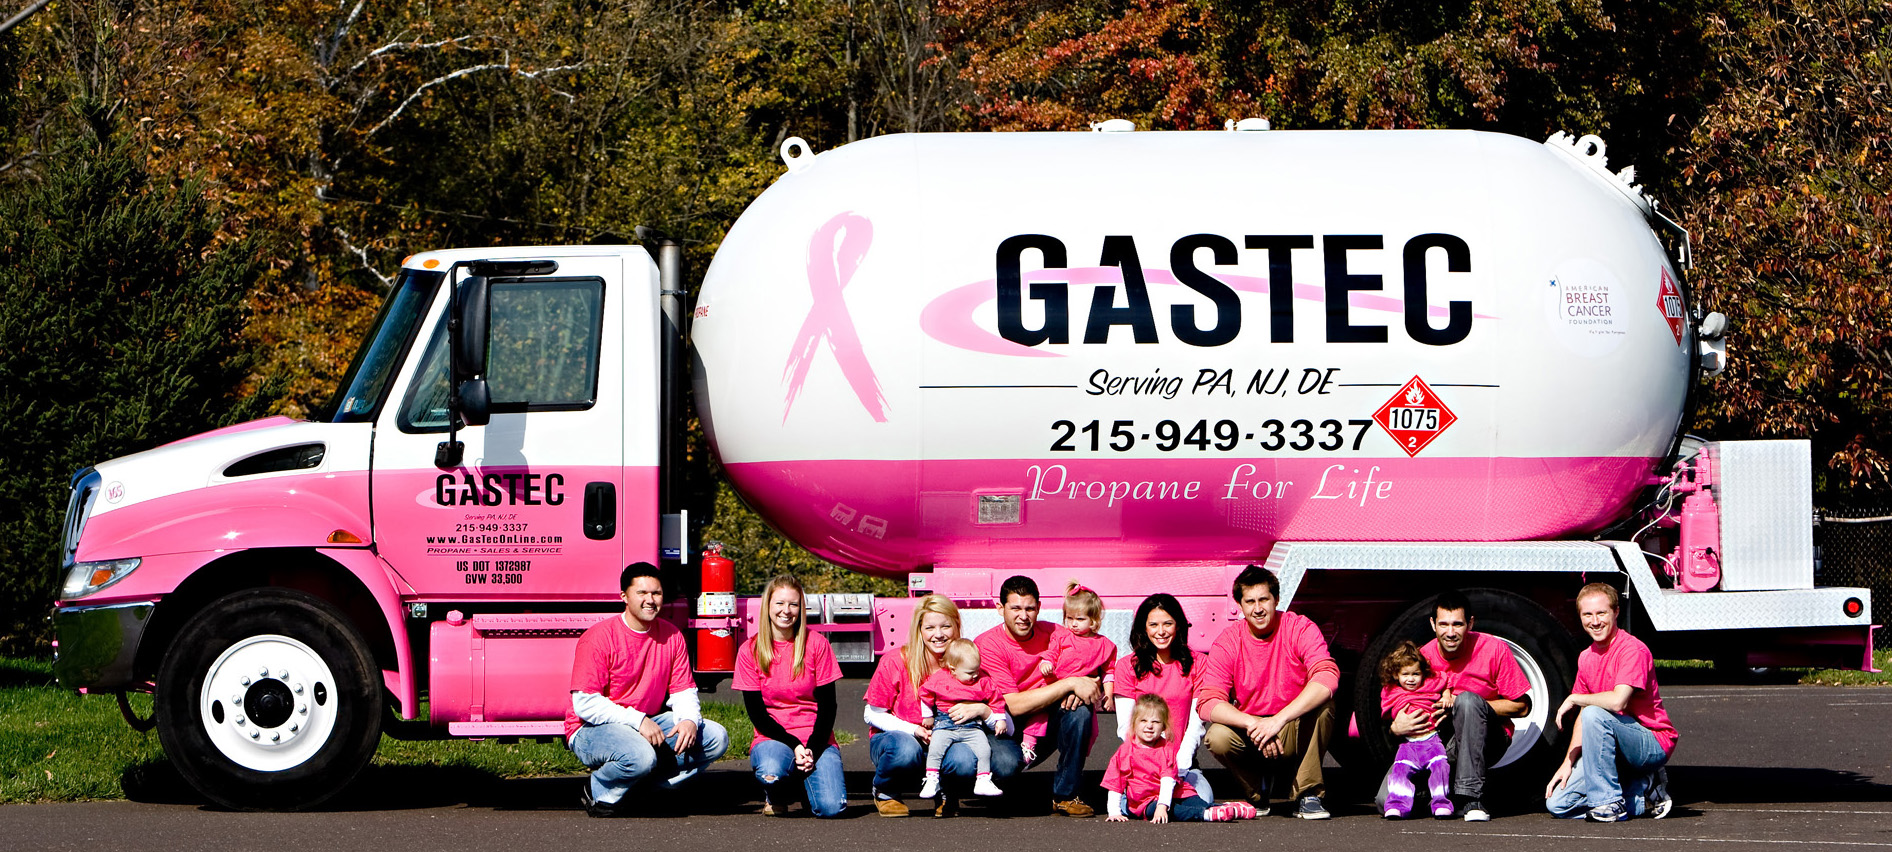 GasTec Pink Propane Truck